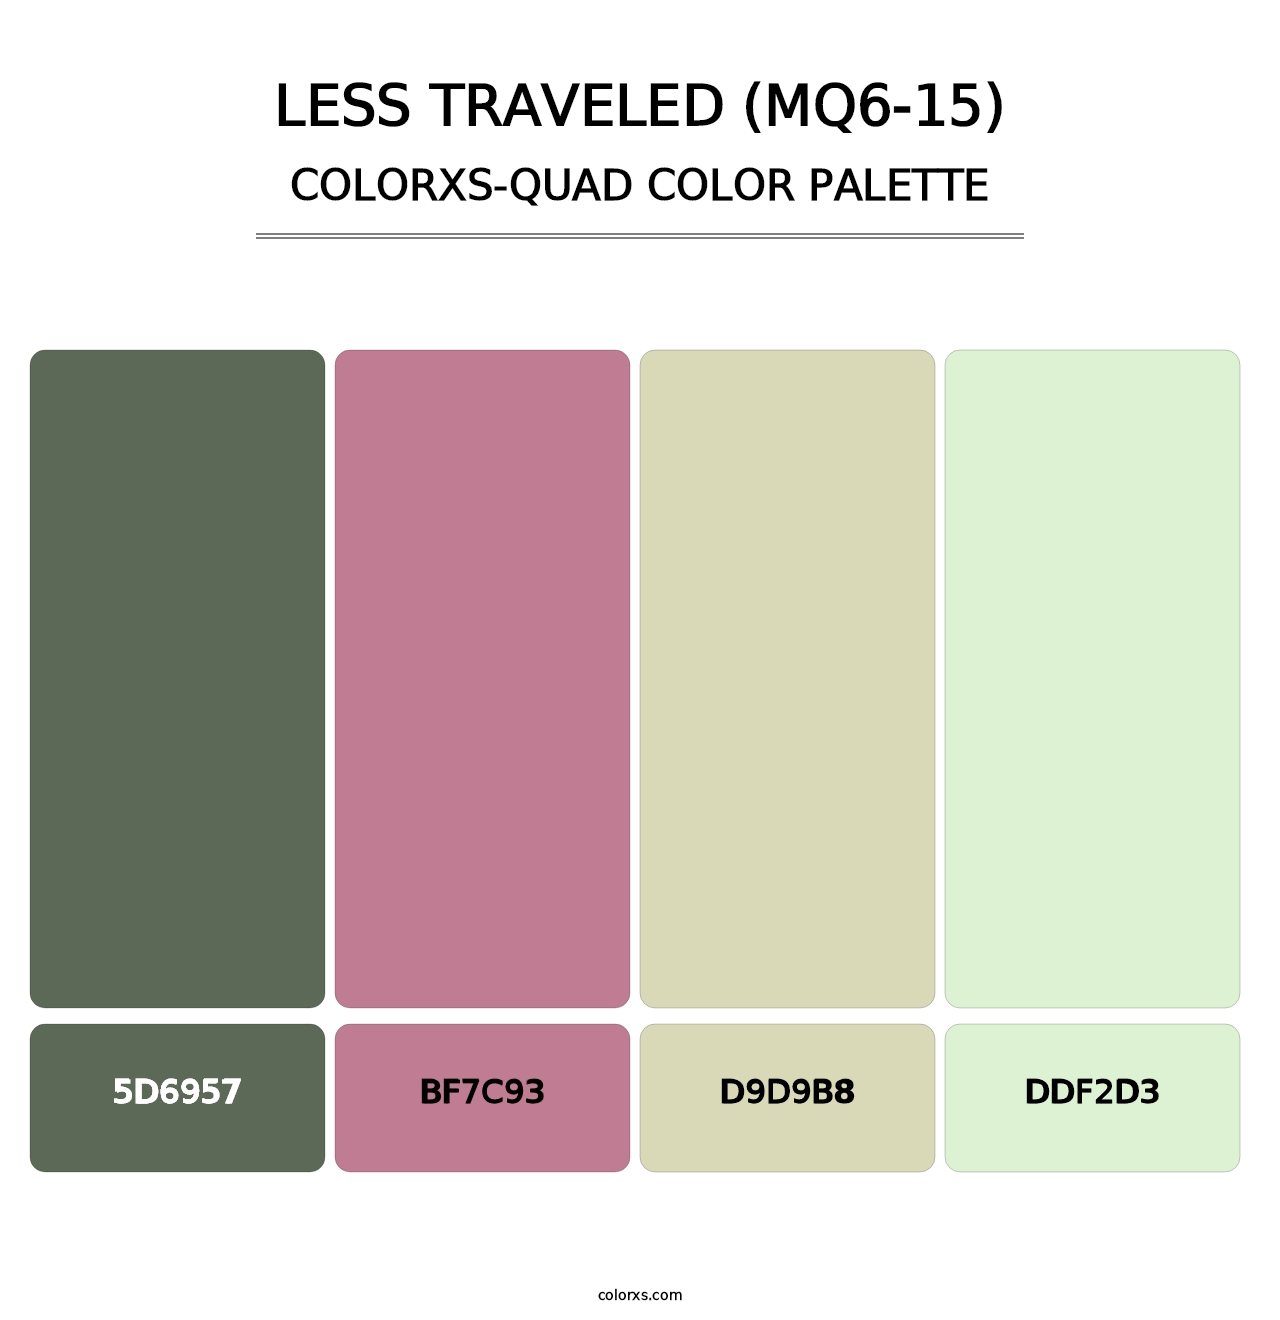 Less Traveled (MQ6-15) - Colorxs Quad Palette